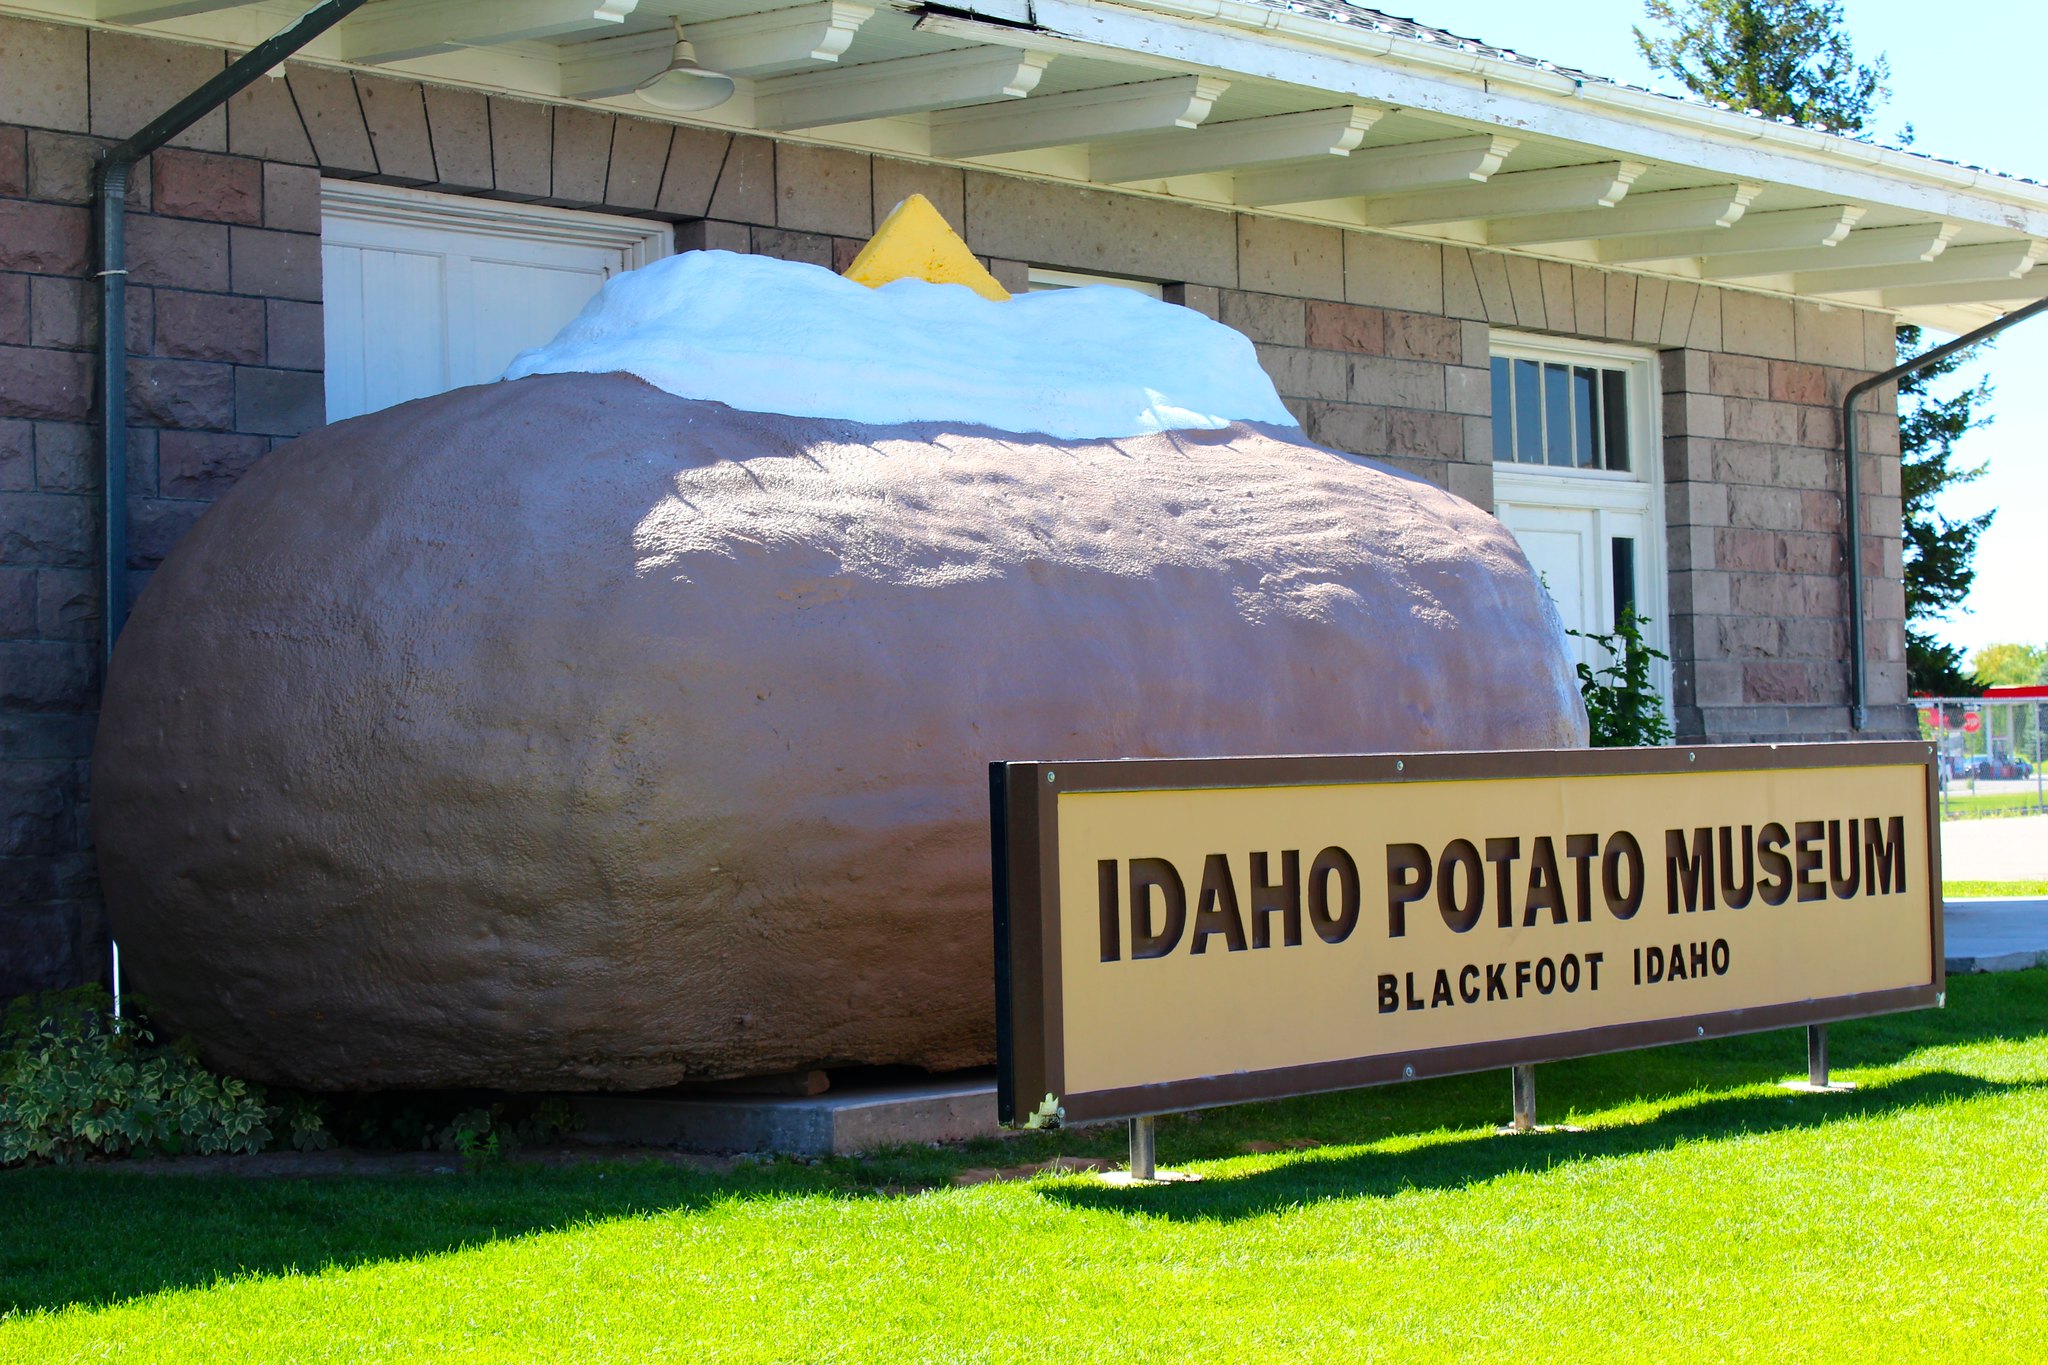 Idaho Potato Museum - Blackfoot